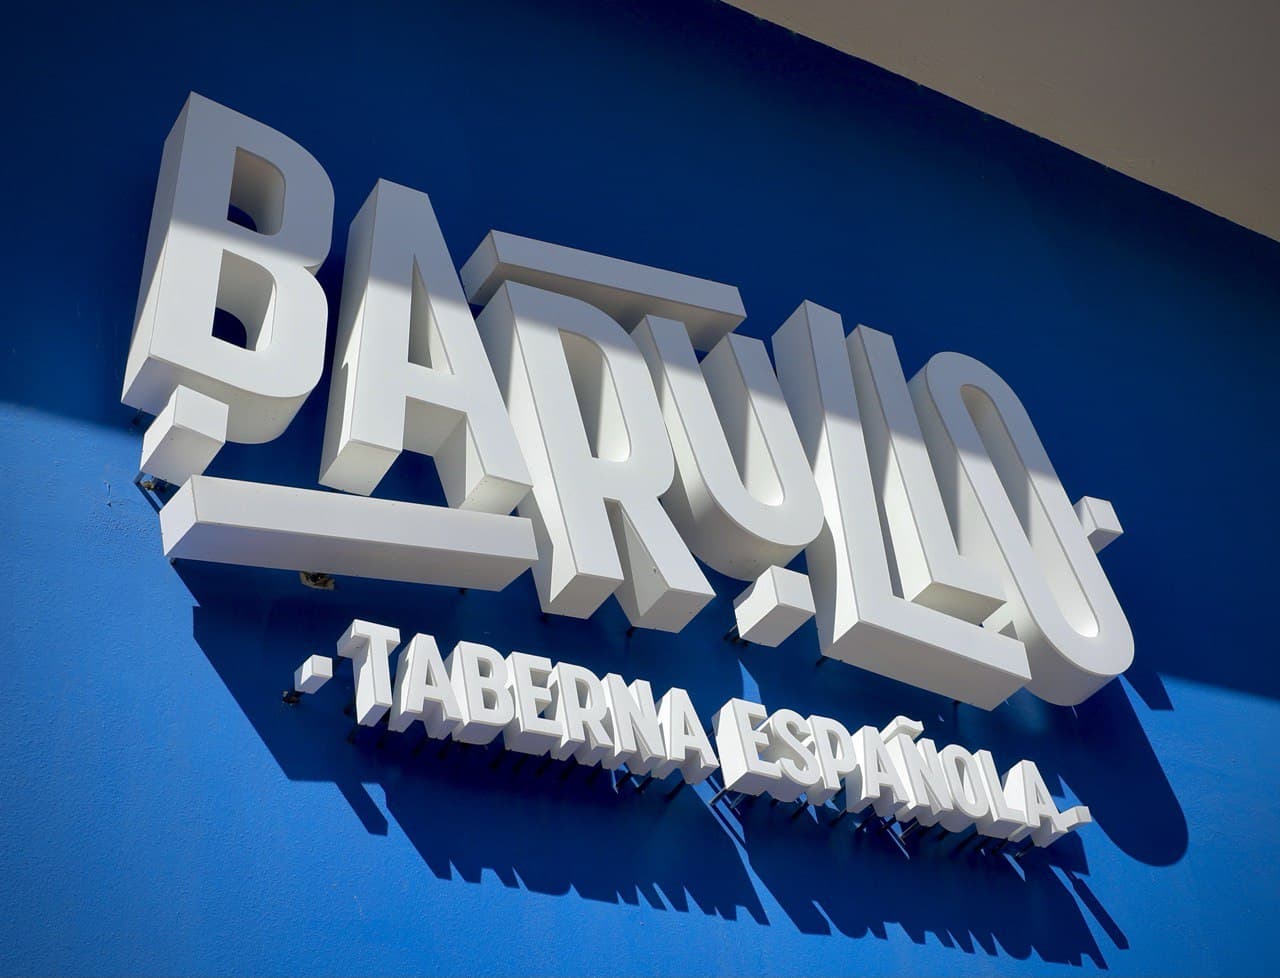 Gobernadora participa de inauguración del restaurante Barullo Taberna Española